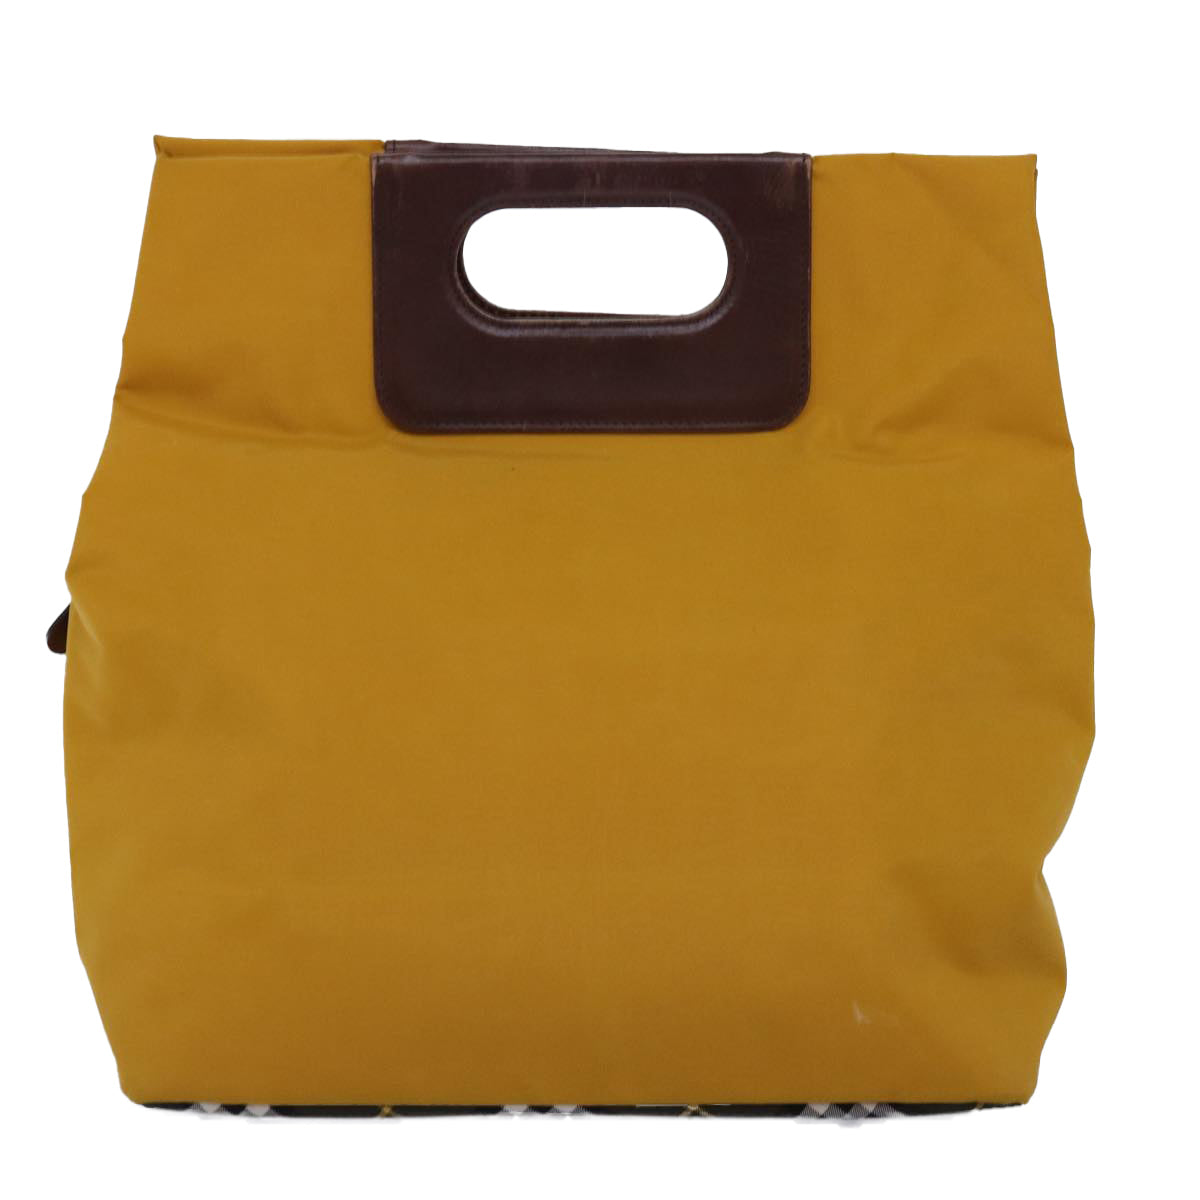 Burberrys Nova Check Blue Label Hand Bag Nylon Yellow Auth bs14254